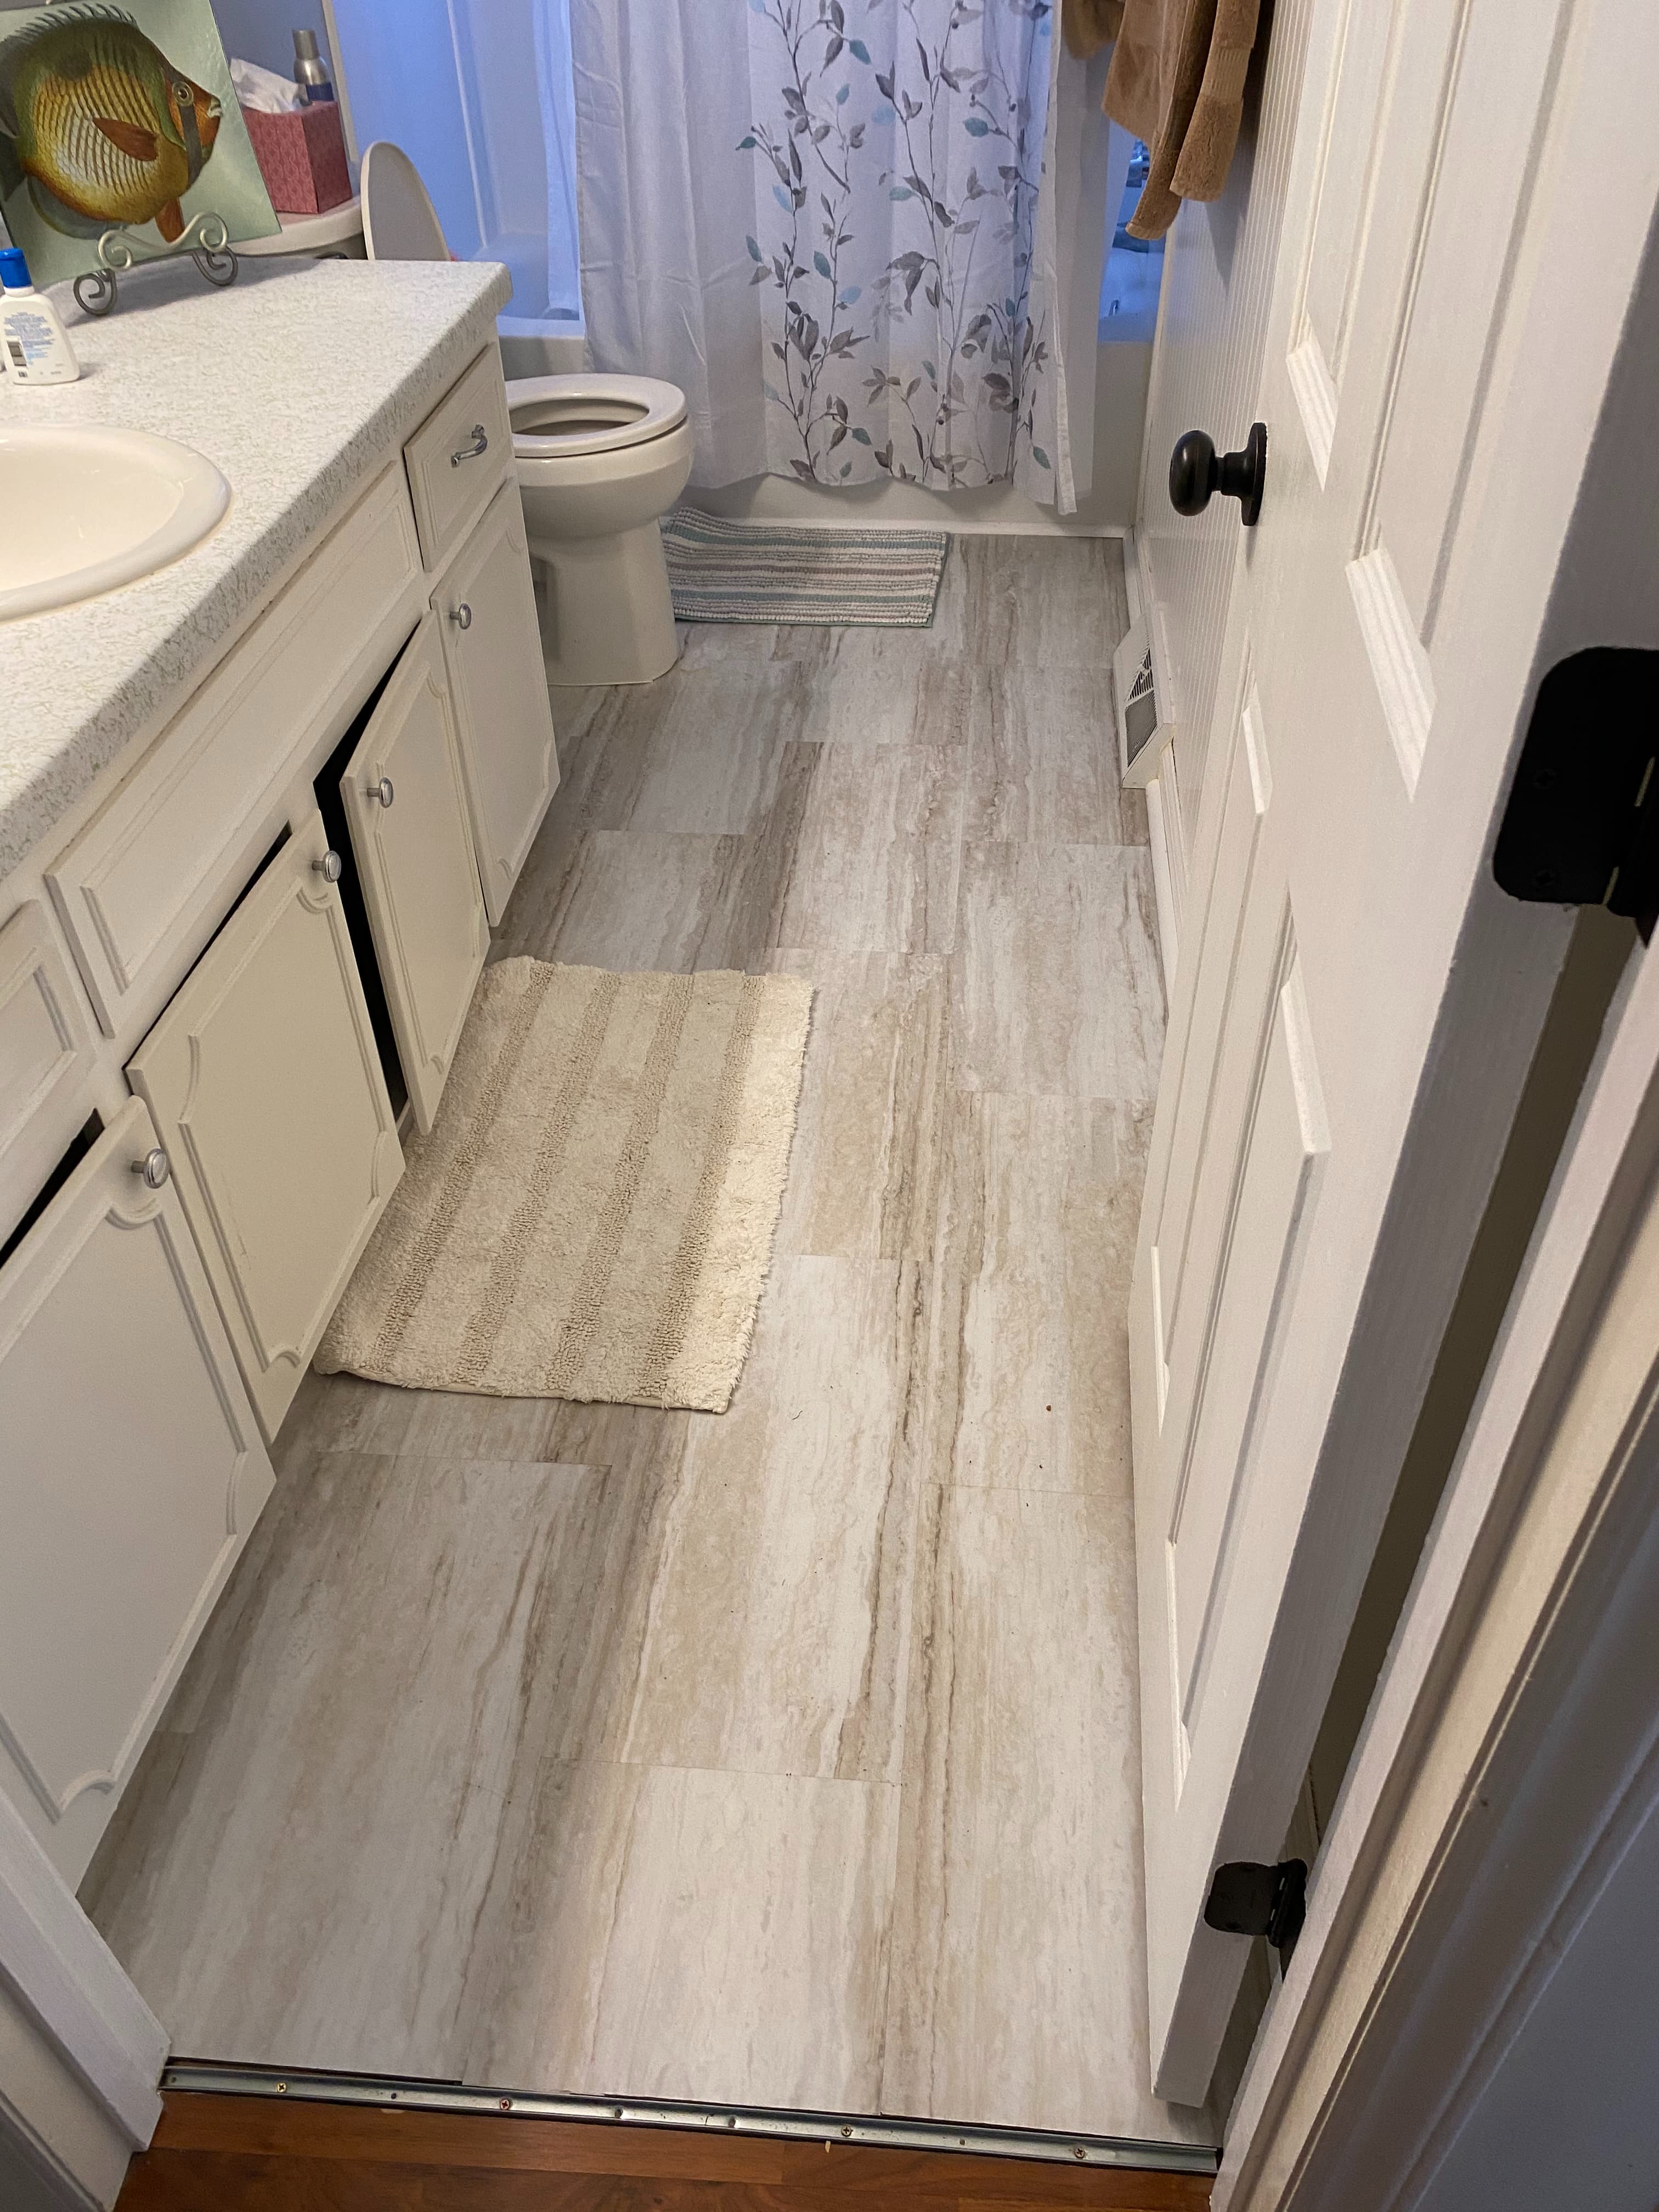 Bathroom flooring | Carpetland USA of Virginia